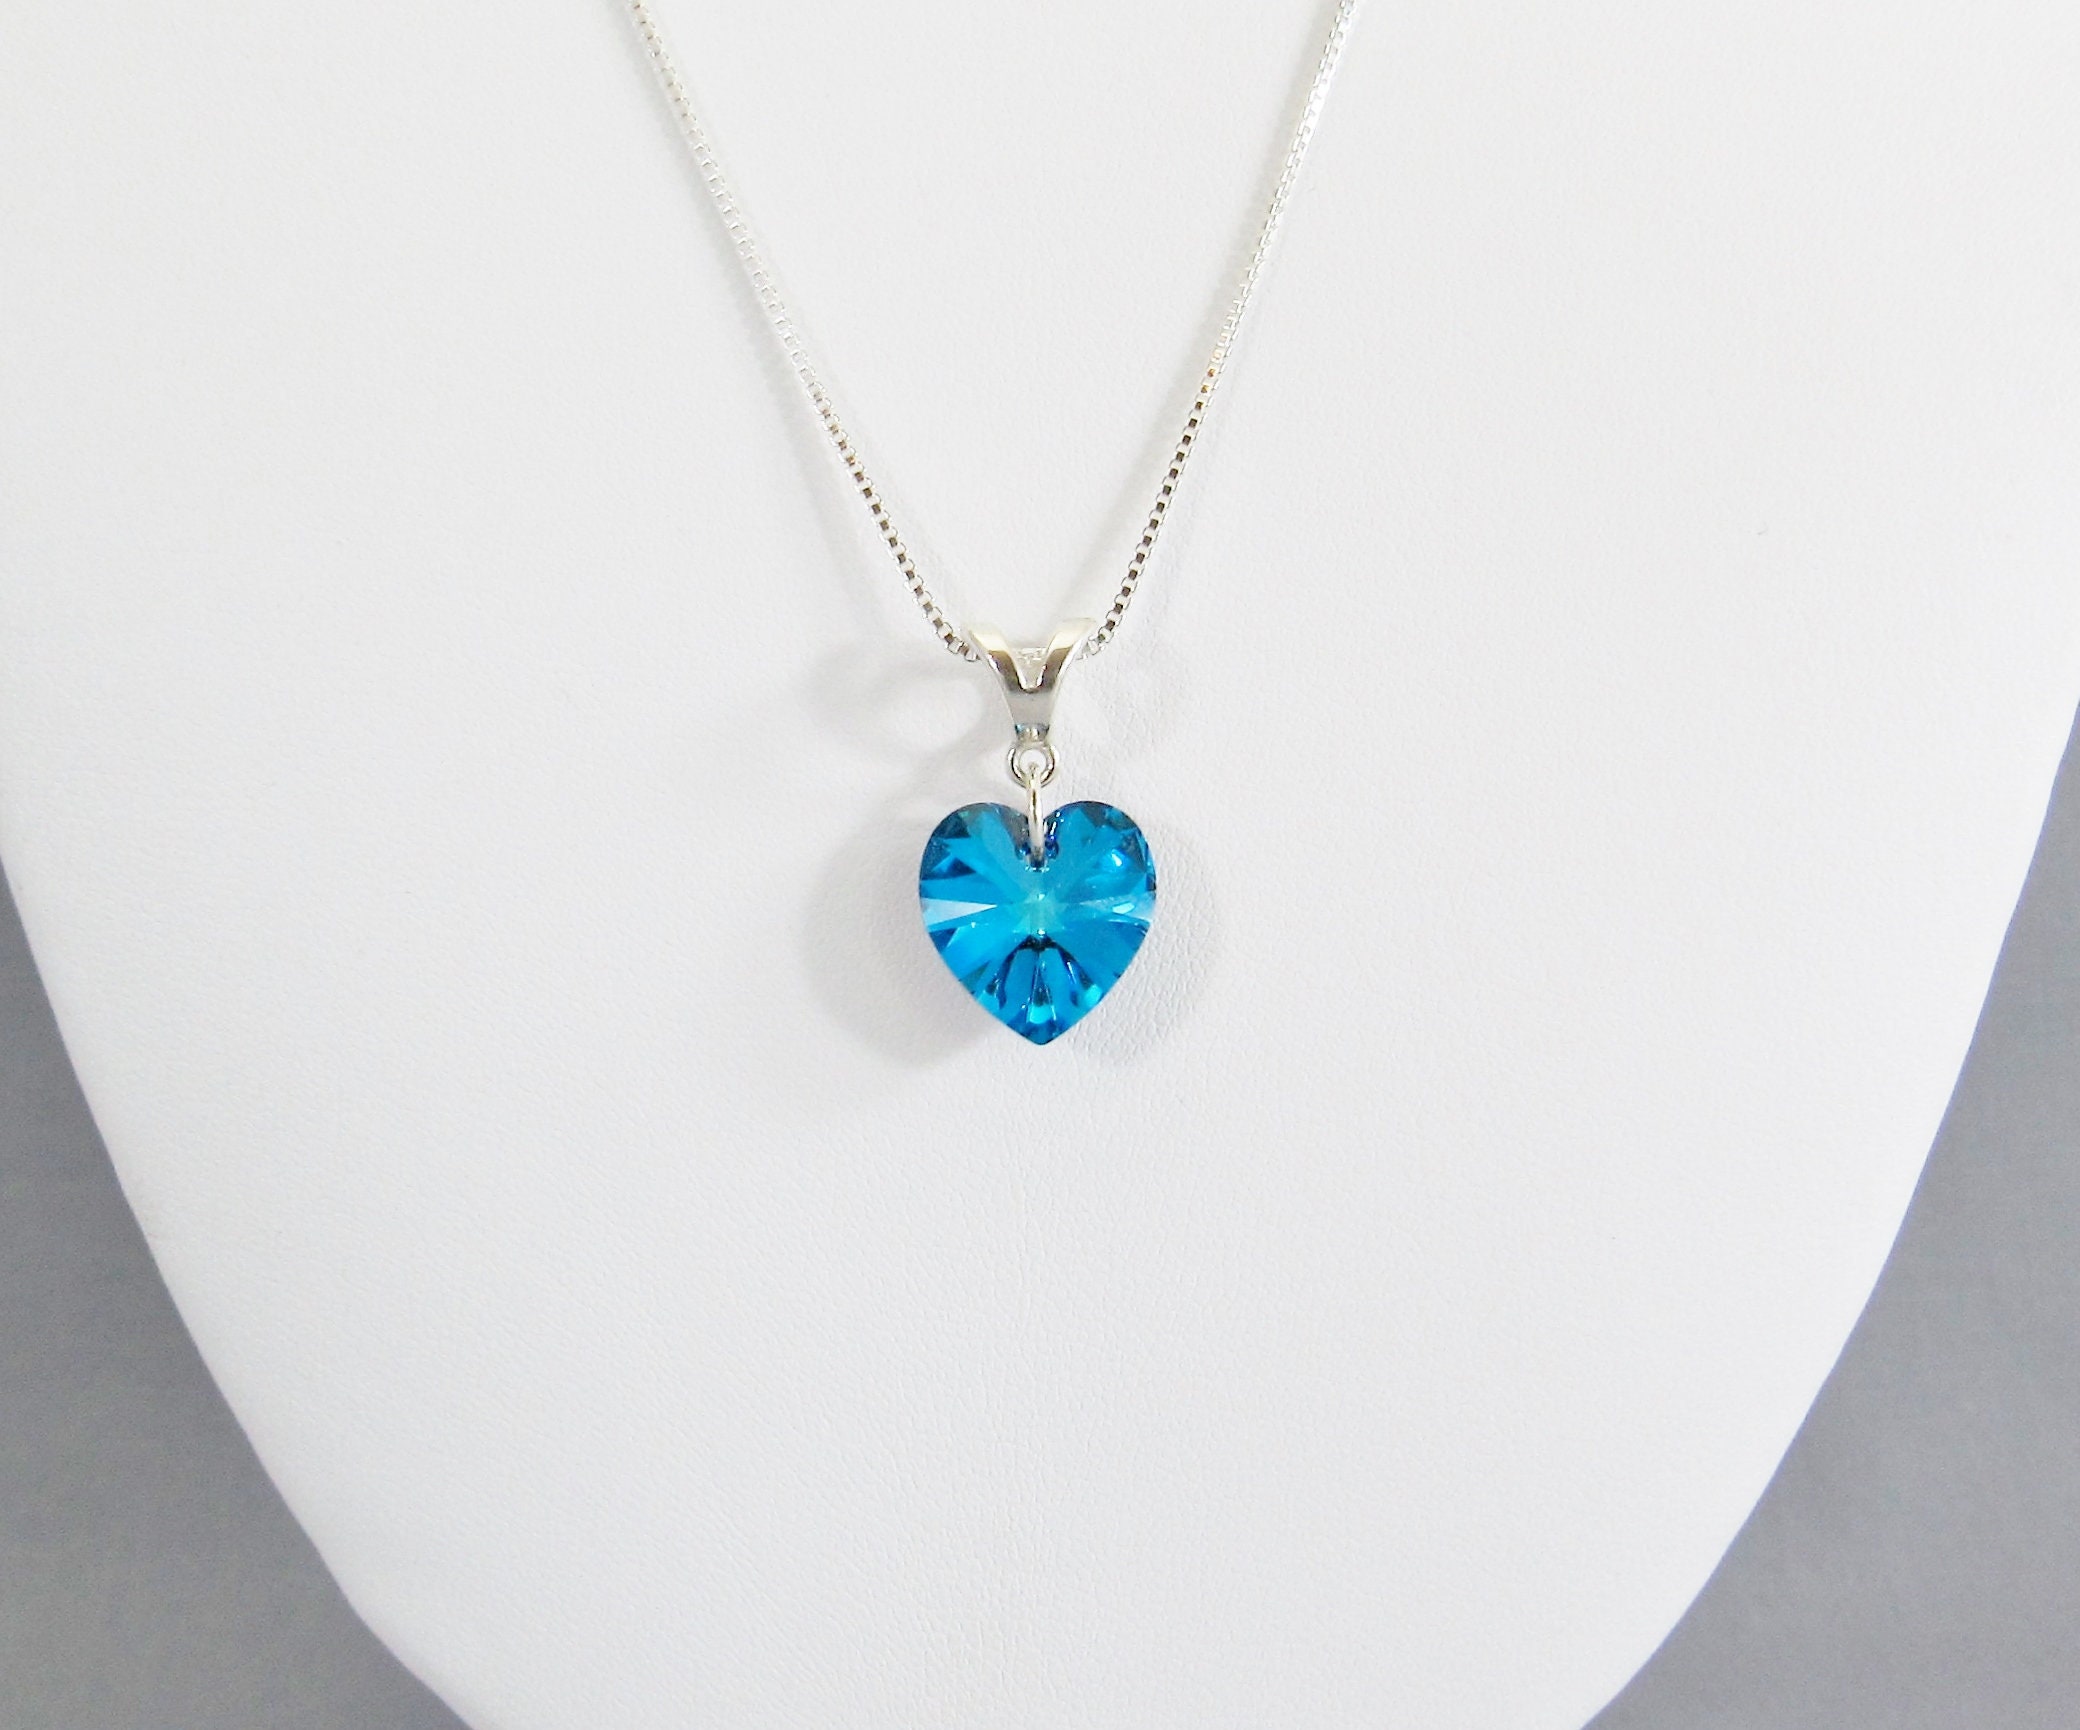 COLE.LOVE Lotus Flower Pendant Necklace Handmade with Swarovski  Crystal,Blue Heart Gemstones Jewelry : Clothing, Shoes & Jewelry -  Amazon.com